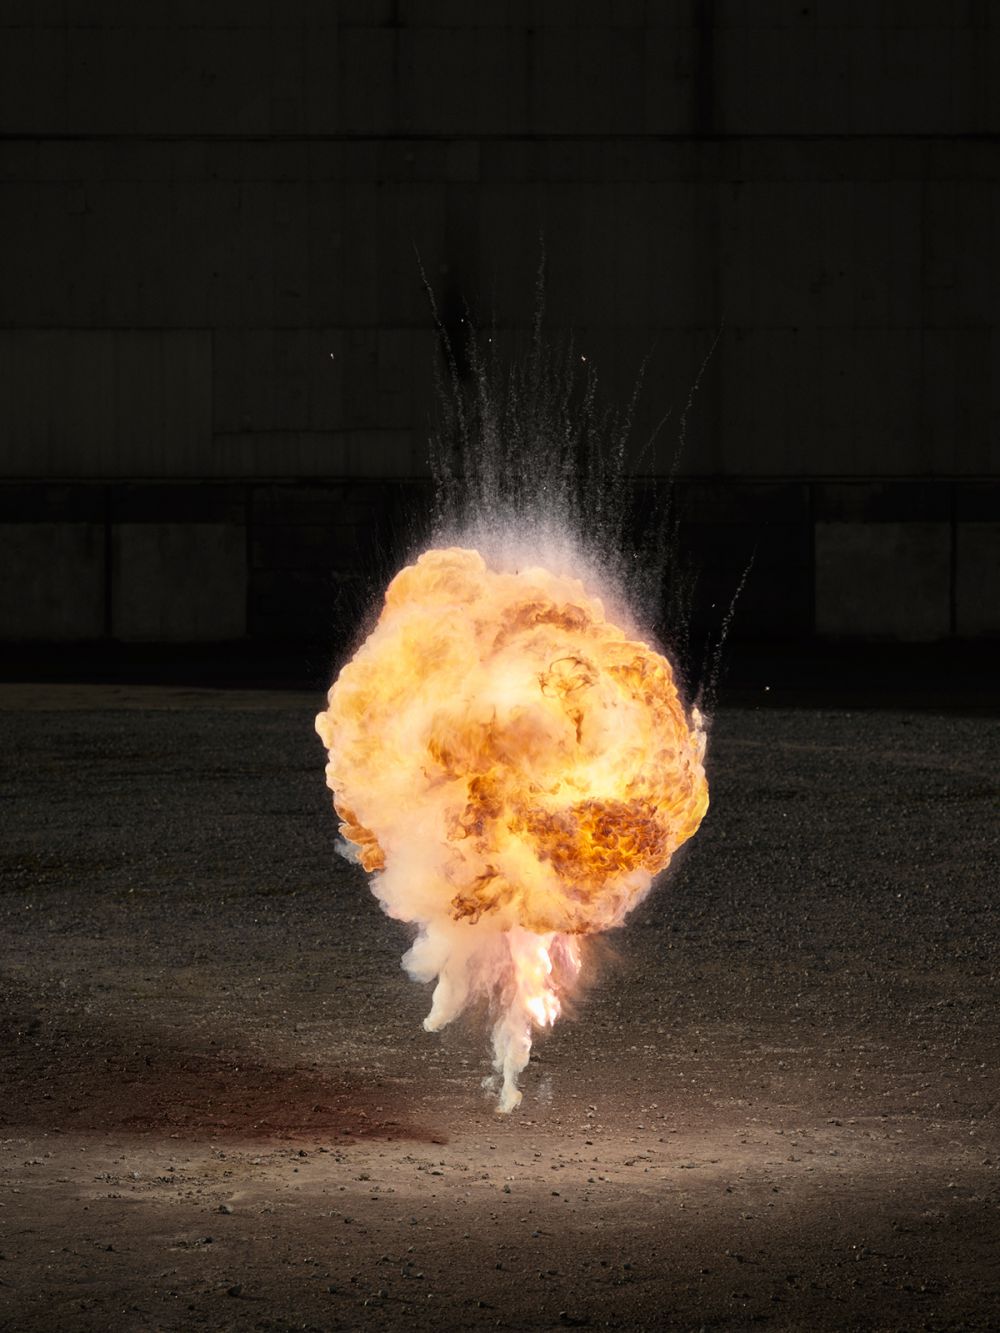 10 Foto 'slow motion' ledakan ini sering dikira editan saking kerennya